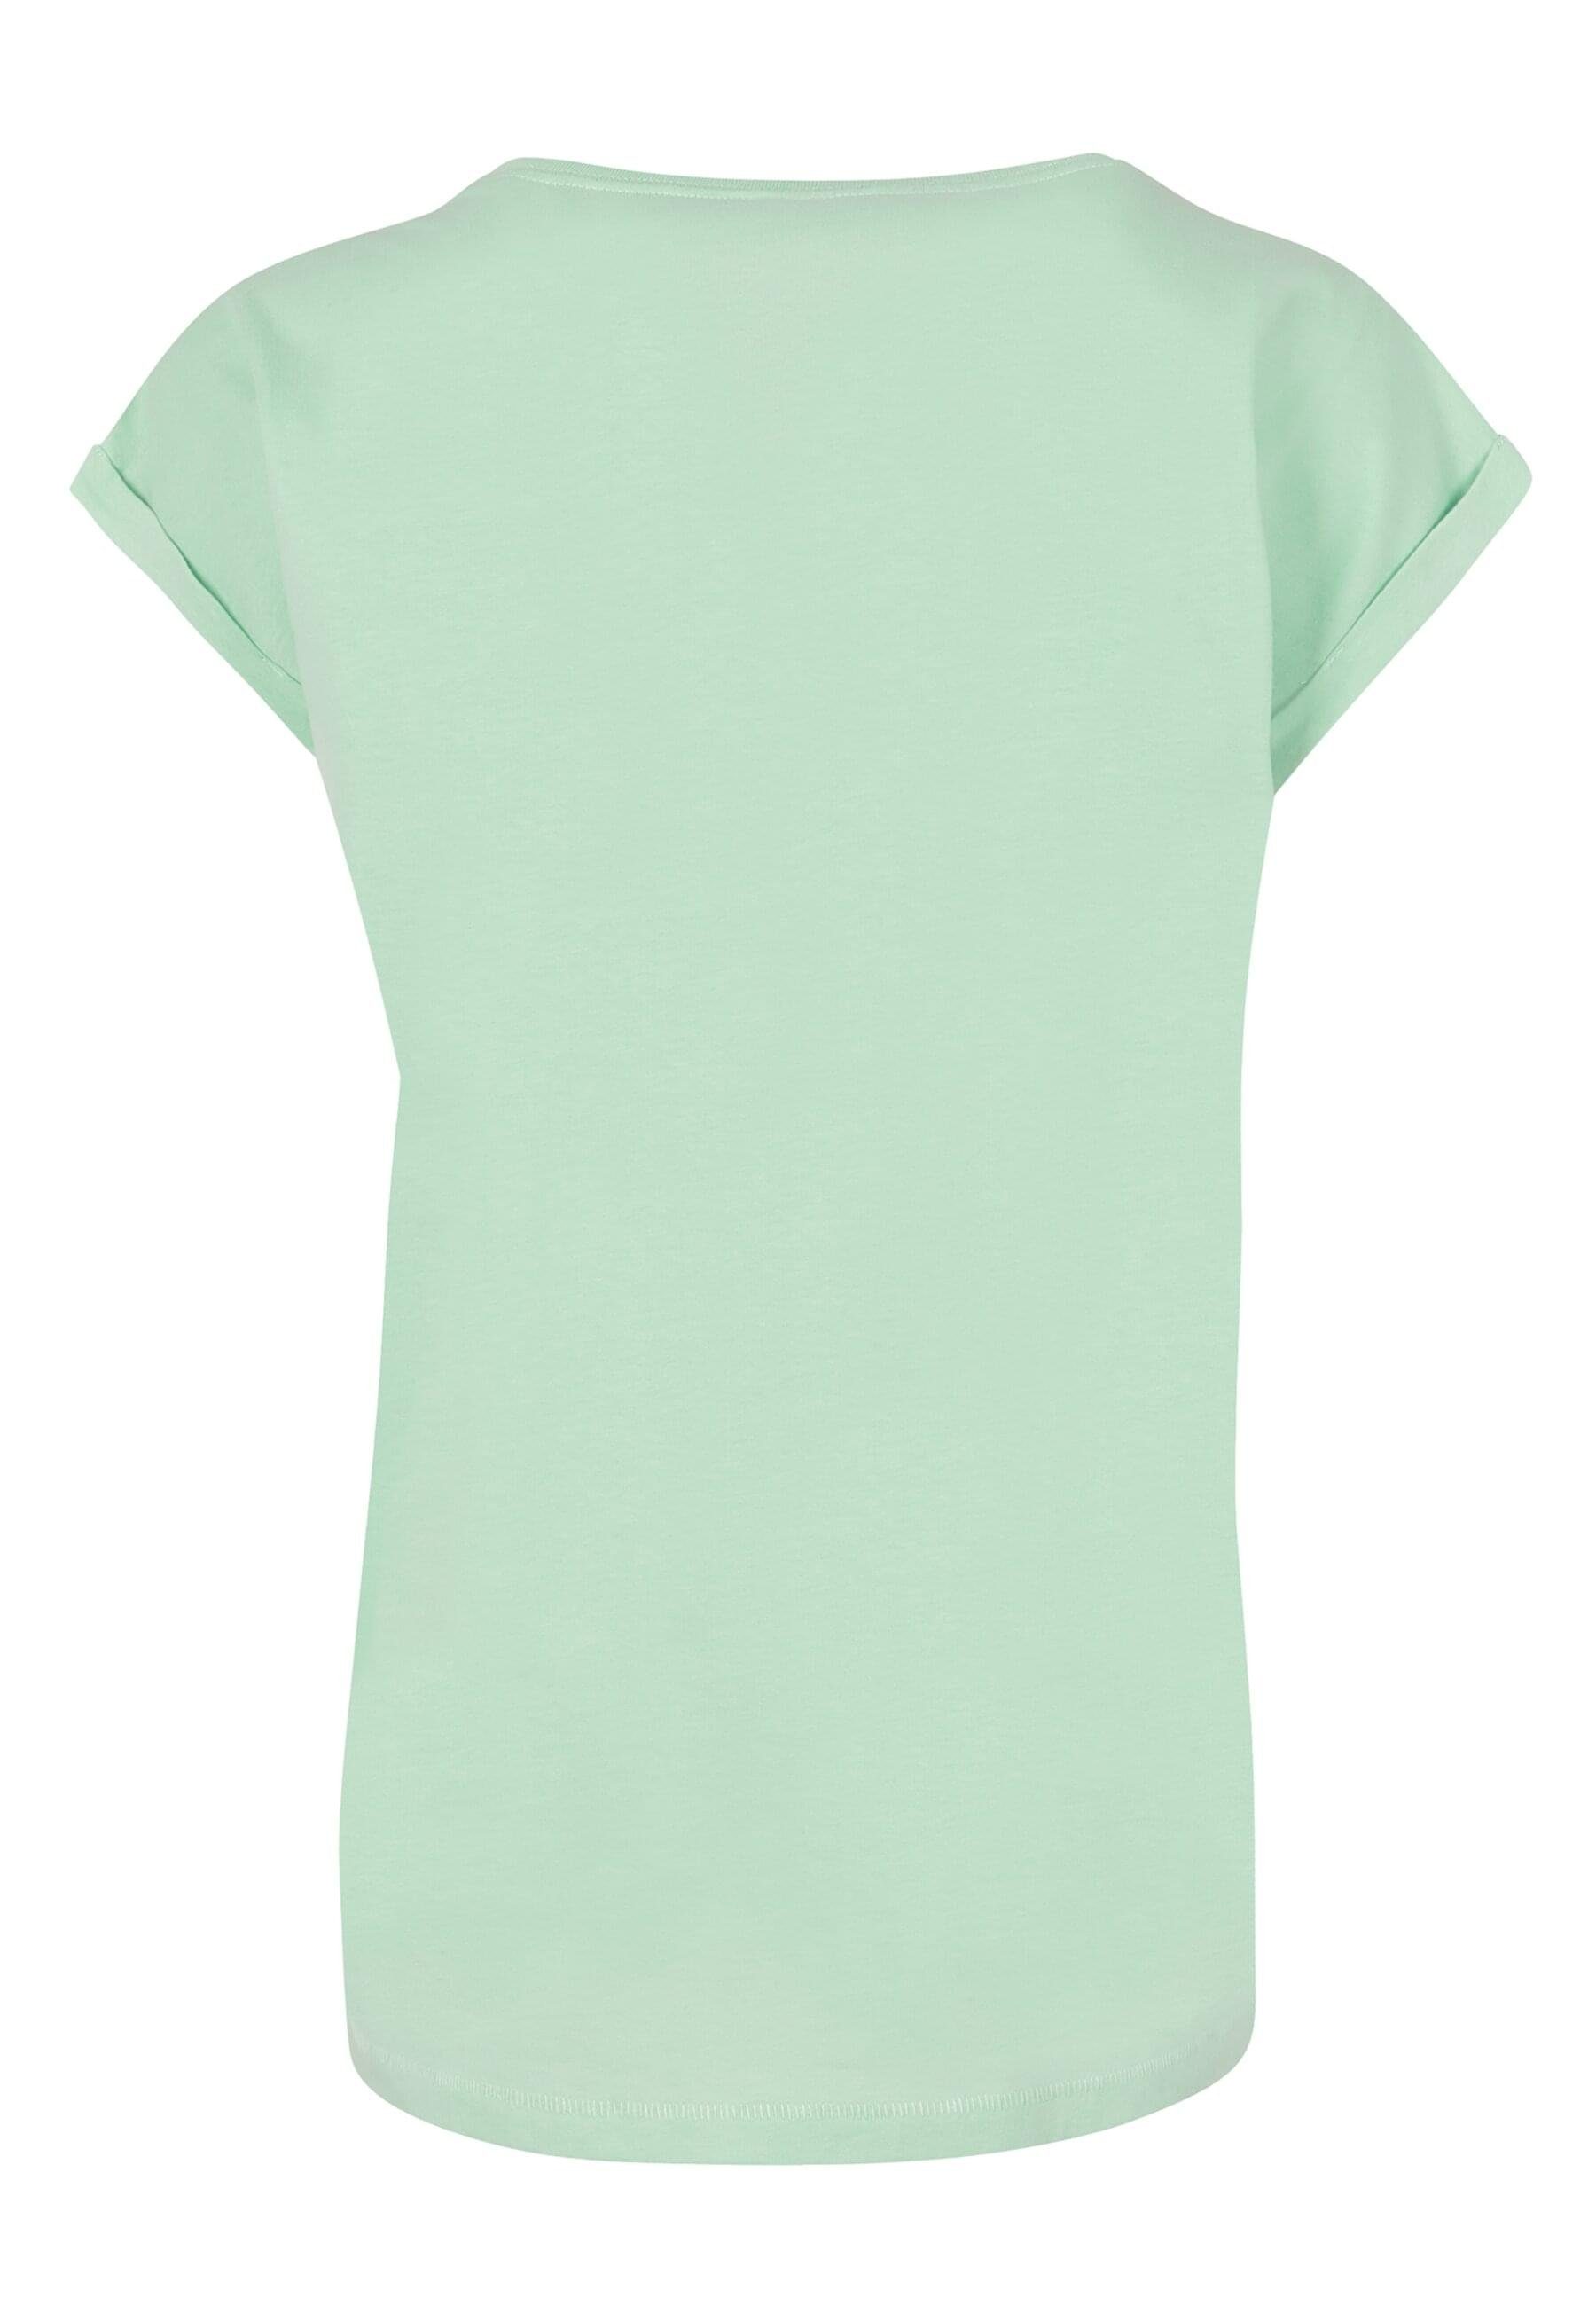 Love Layla T-Shirt Merchcode (1-tlg) neomint I Damen Ladies T-Shirt